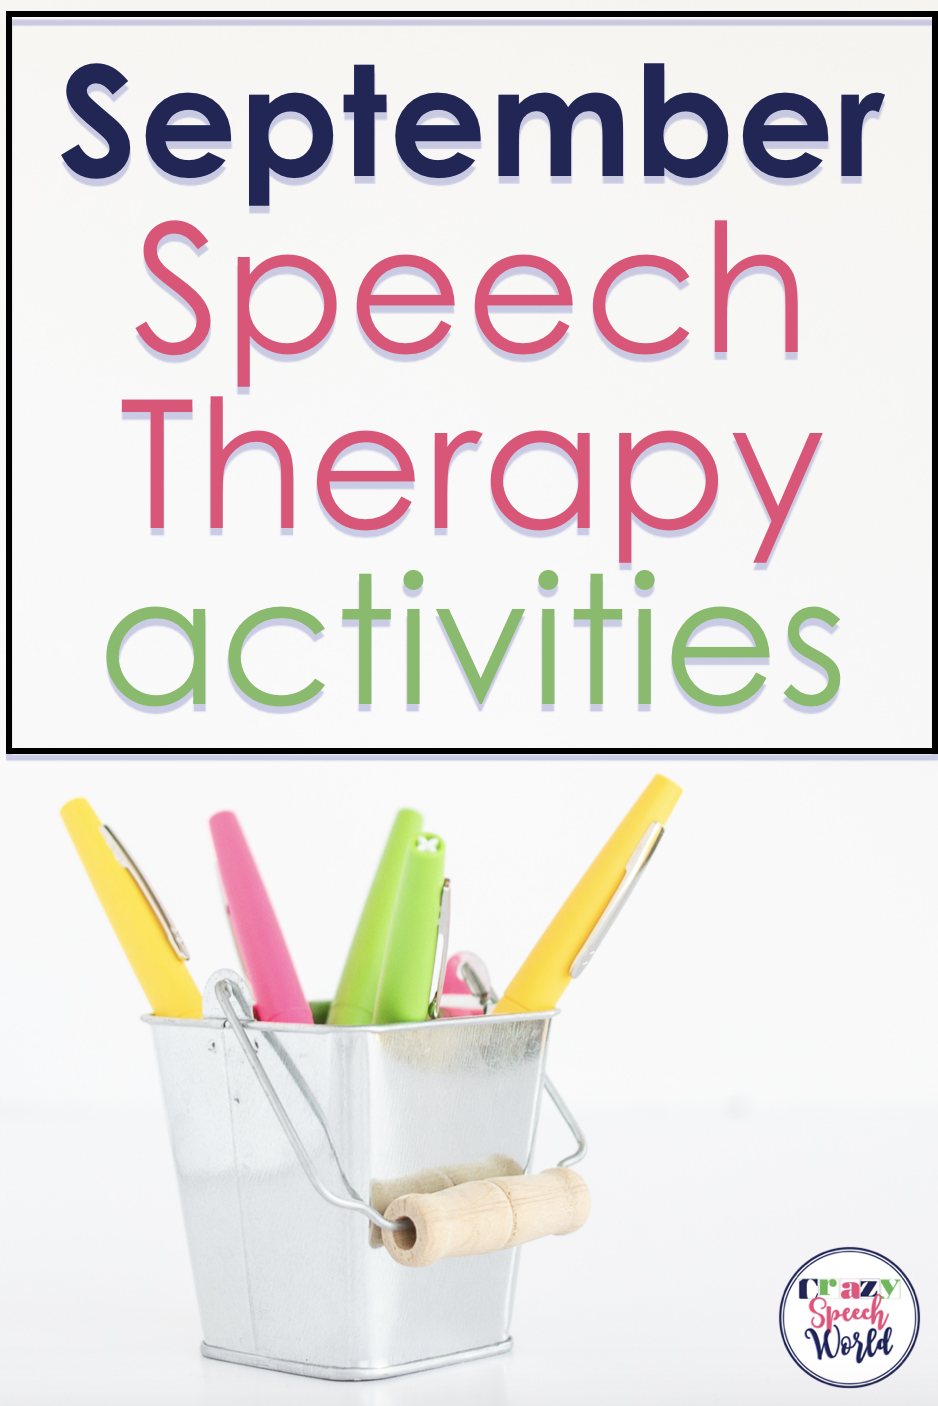 september-themed-activities-for-speech-therapy-crazy-speech-world